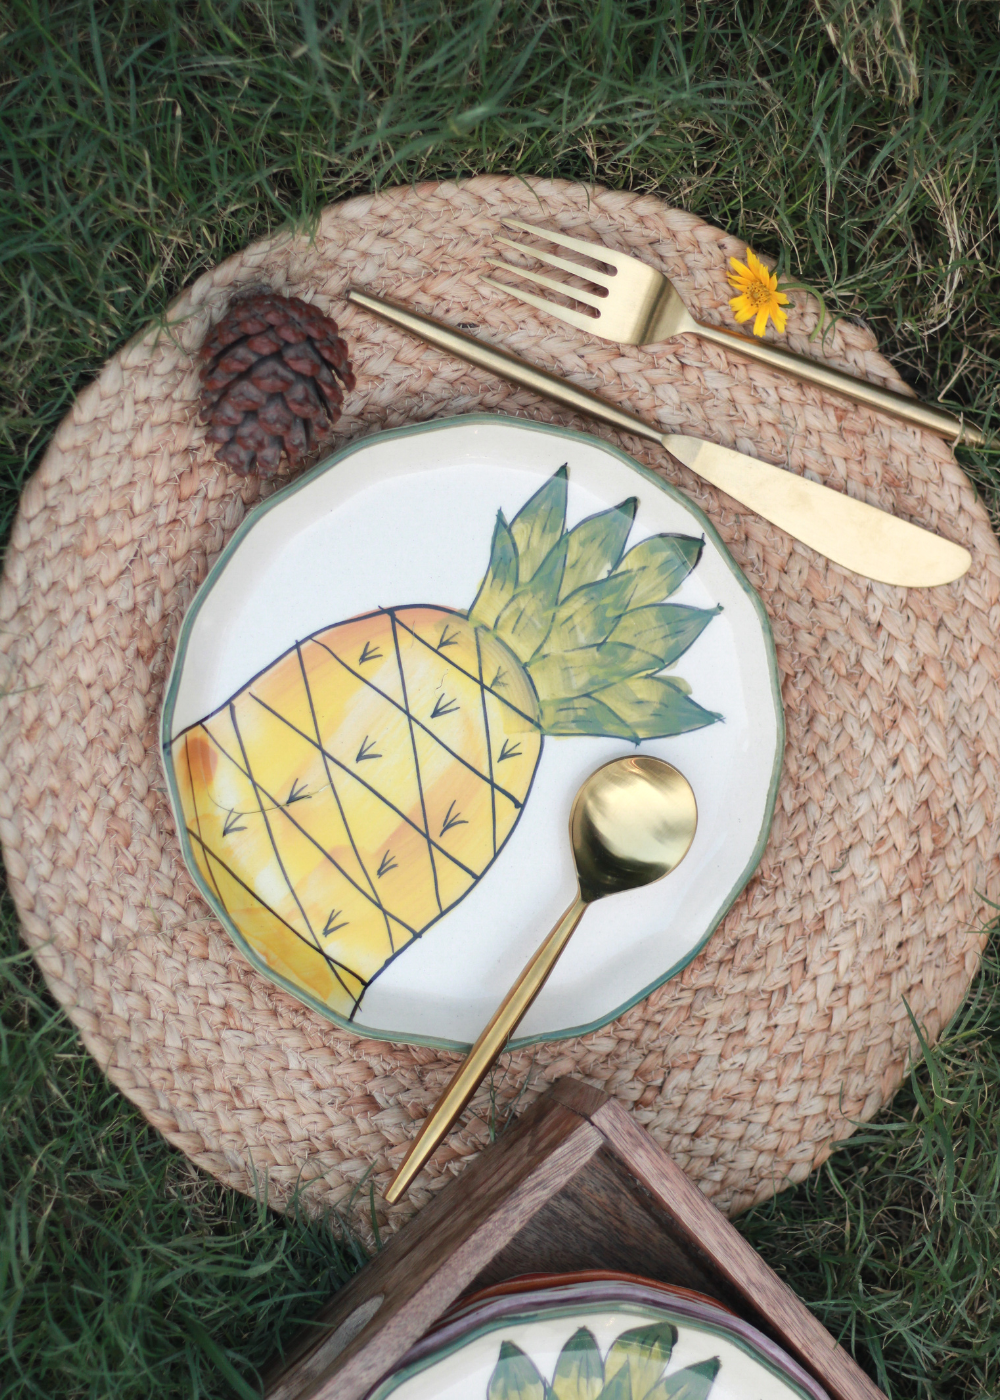 Ceramic pineapple plate on mat 